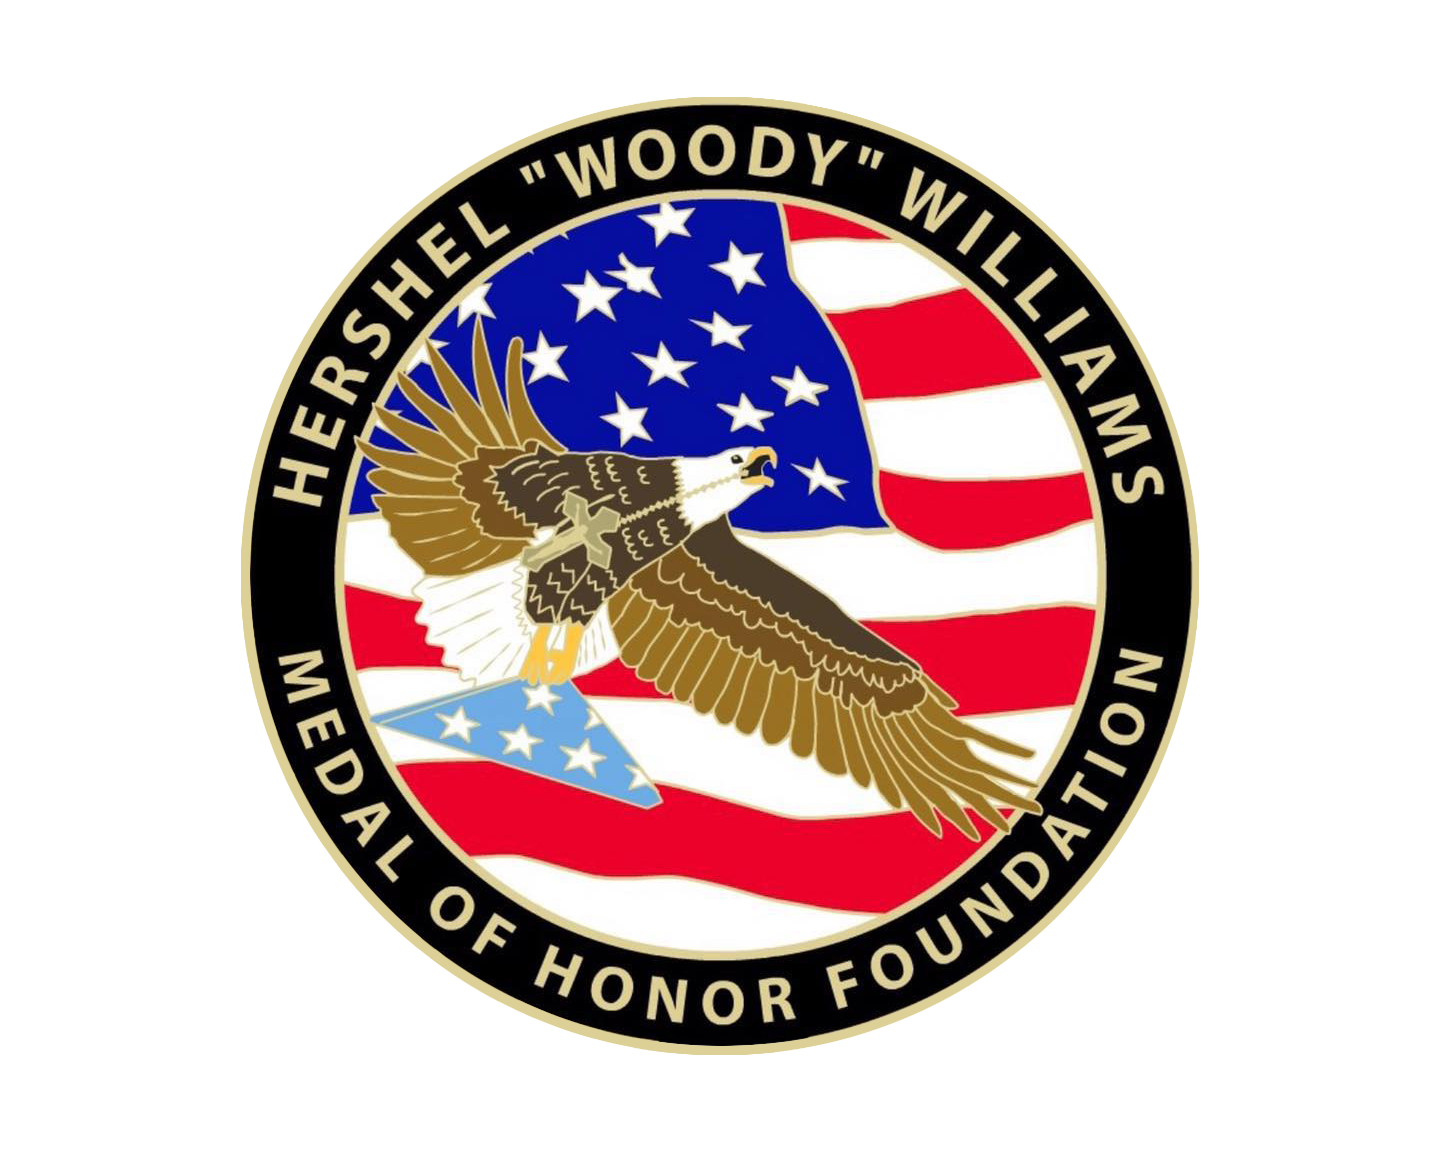 Hershel "Woody" Williams Medal of Honor Foundation